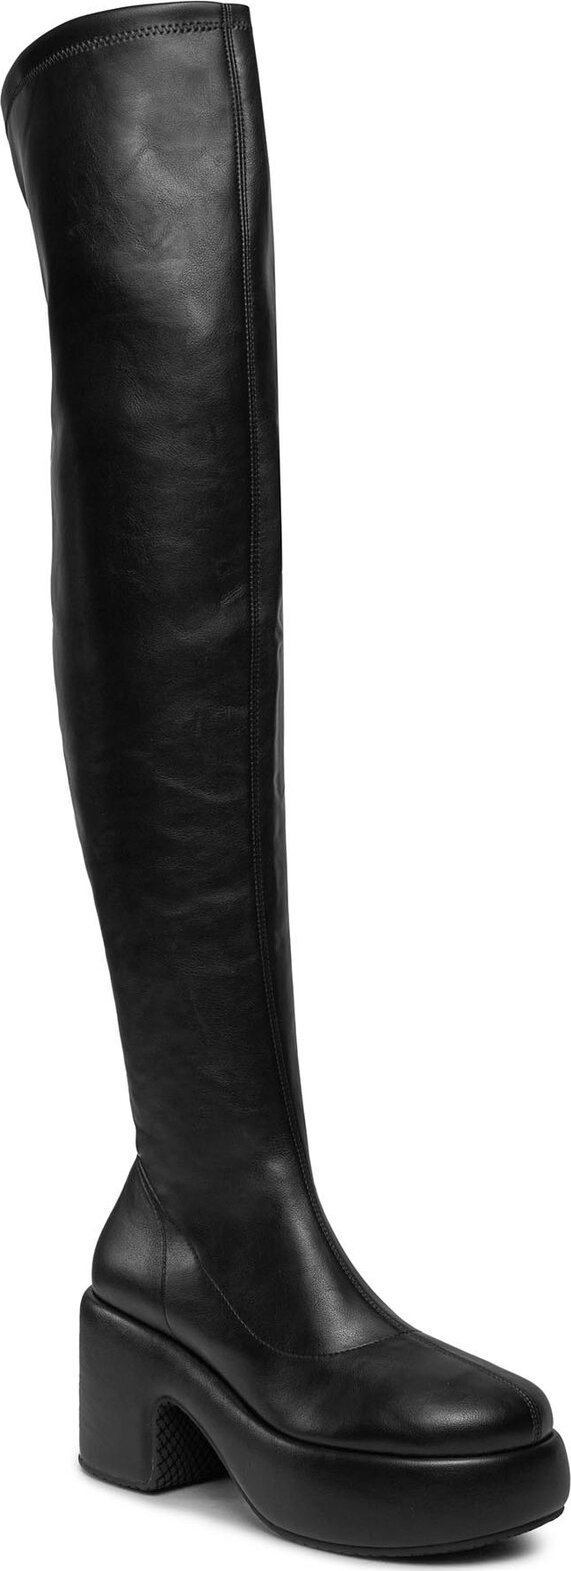 Mušketýrky Bronx High Knee Boots 14295-A Black 01